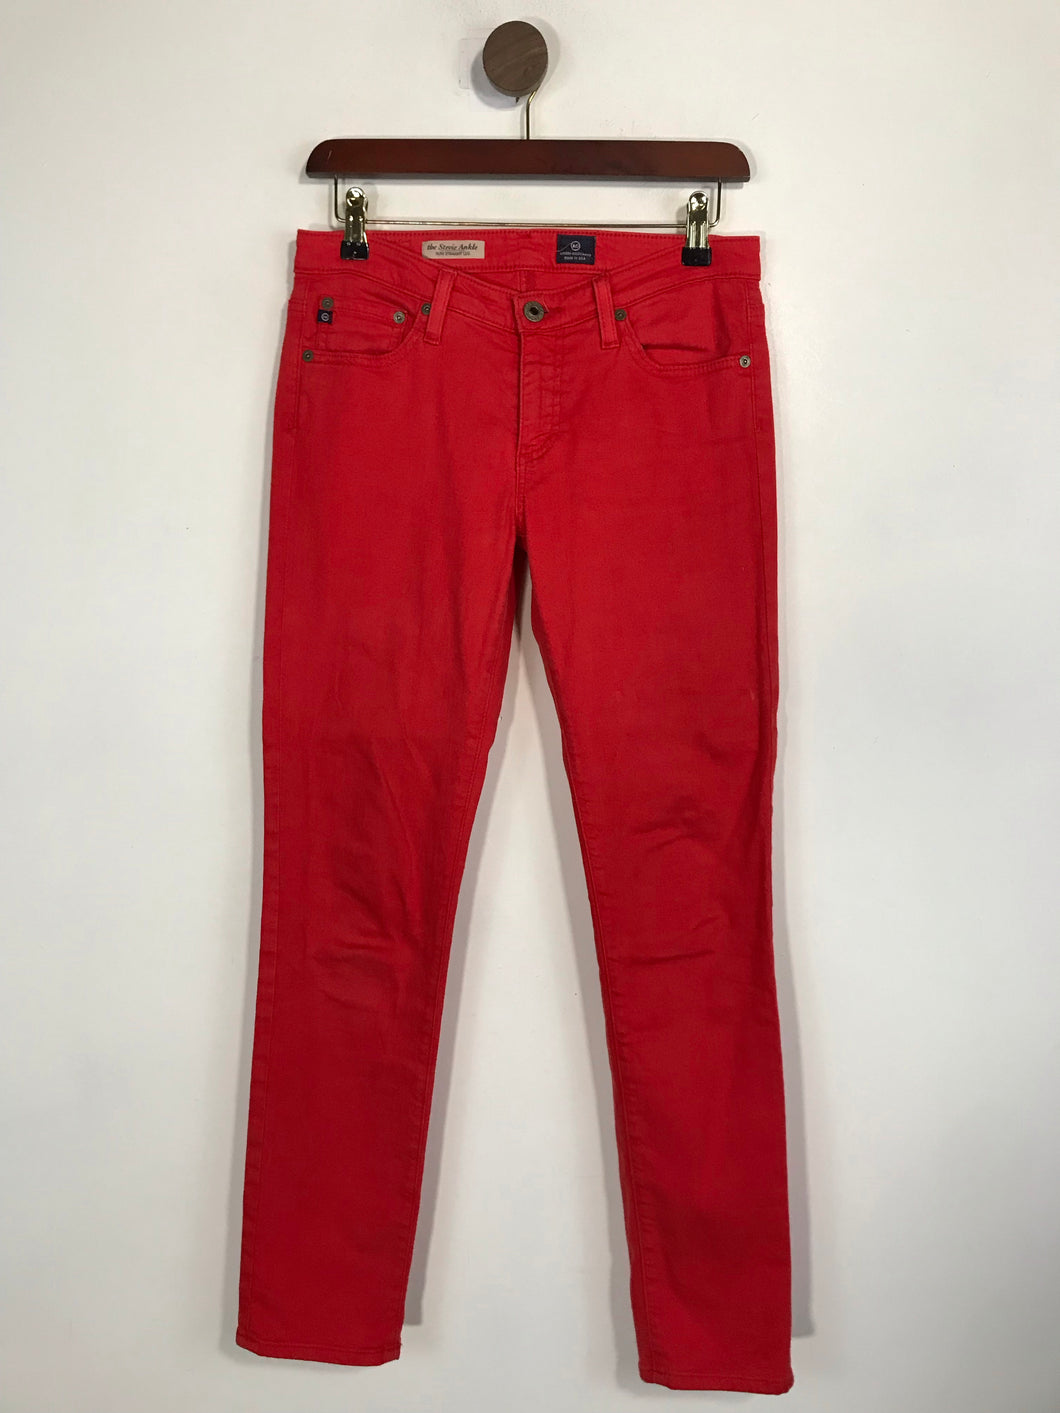 Adriano Goldschmied Women's Skinny Jeans | 27R | Red